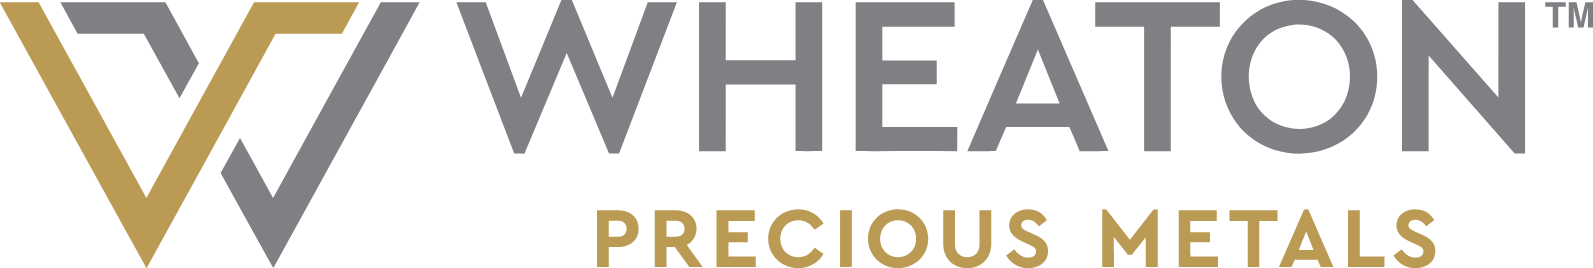 Wheaton Precious Metals logo large (transparent PNG)